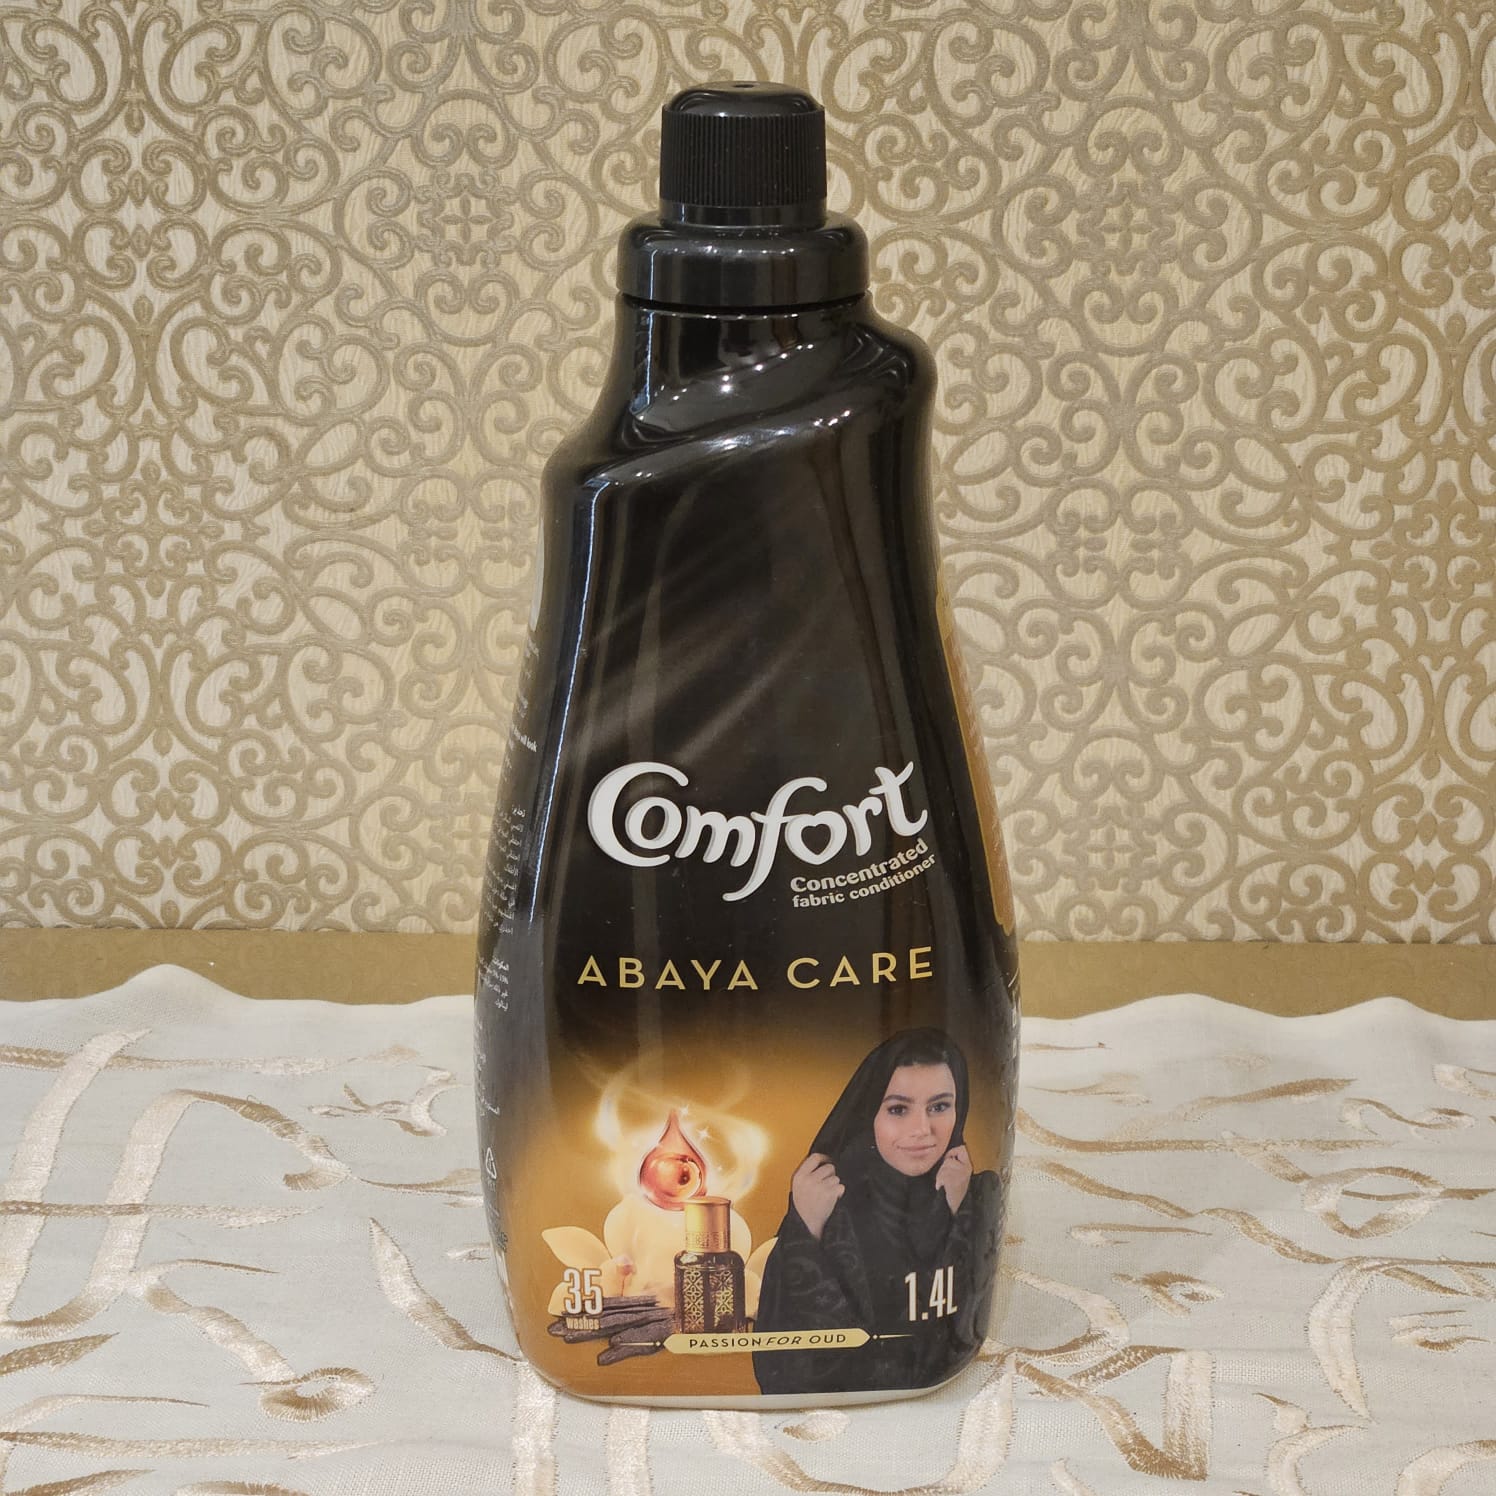 Comfort Oud Abaya Stofversagmiddel 1.4L 